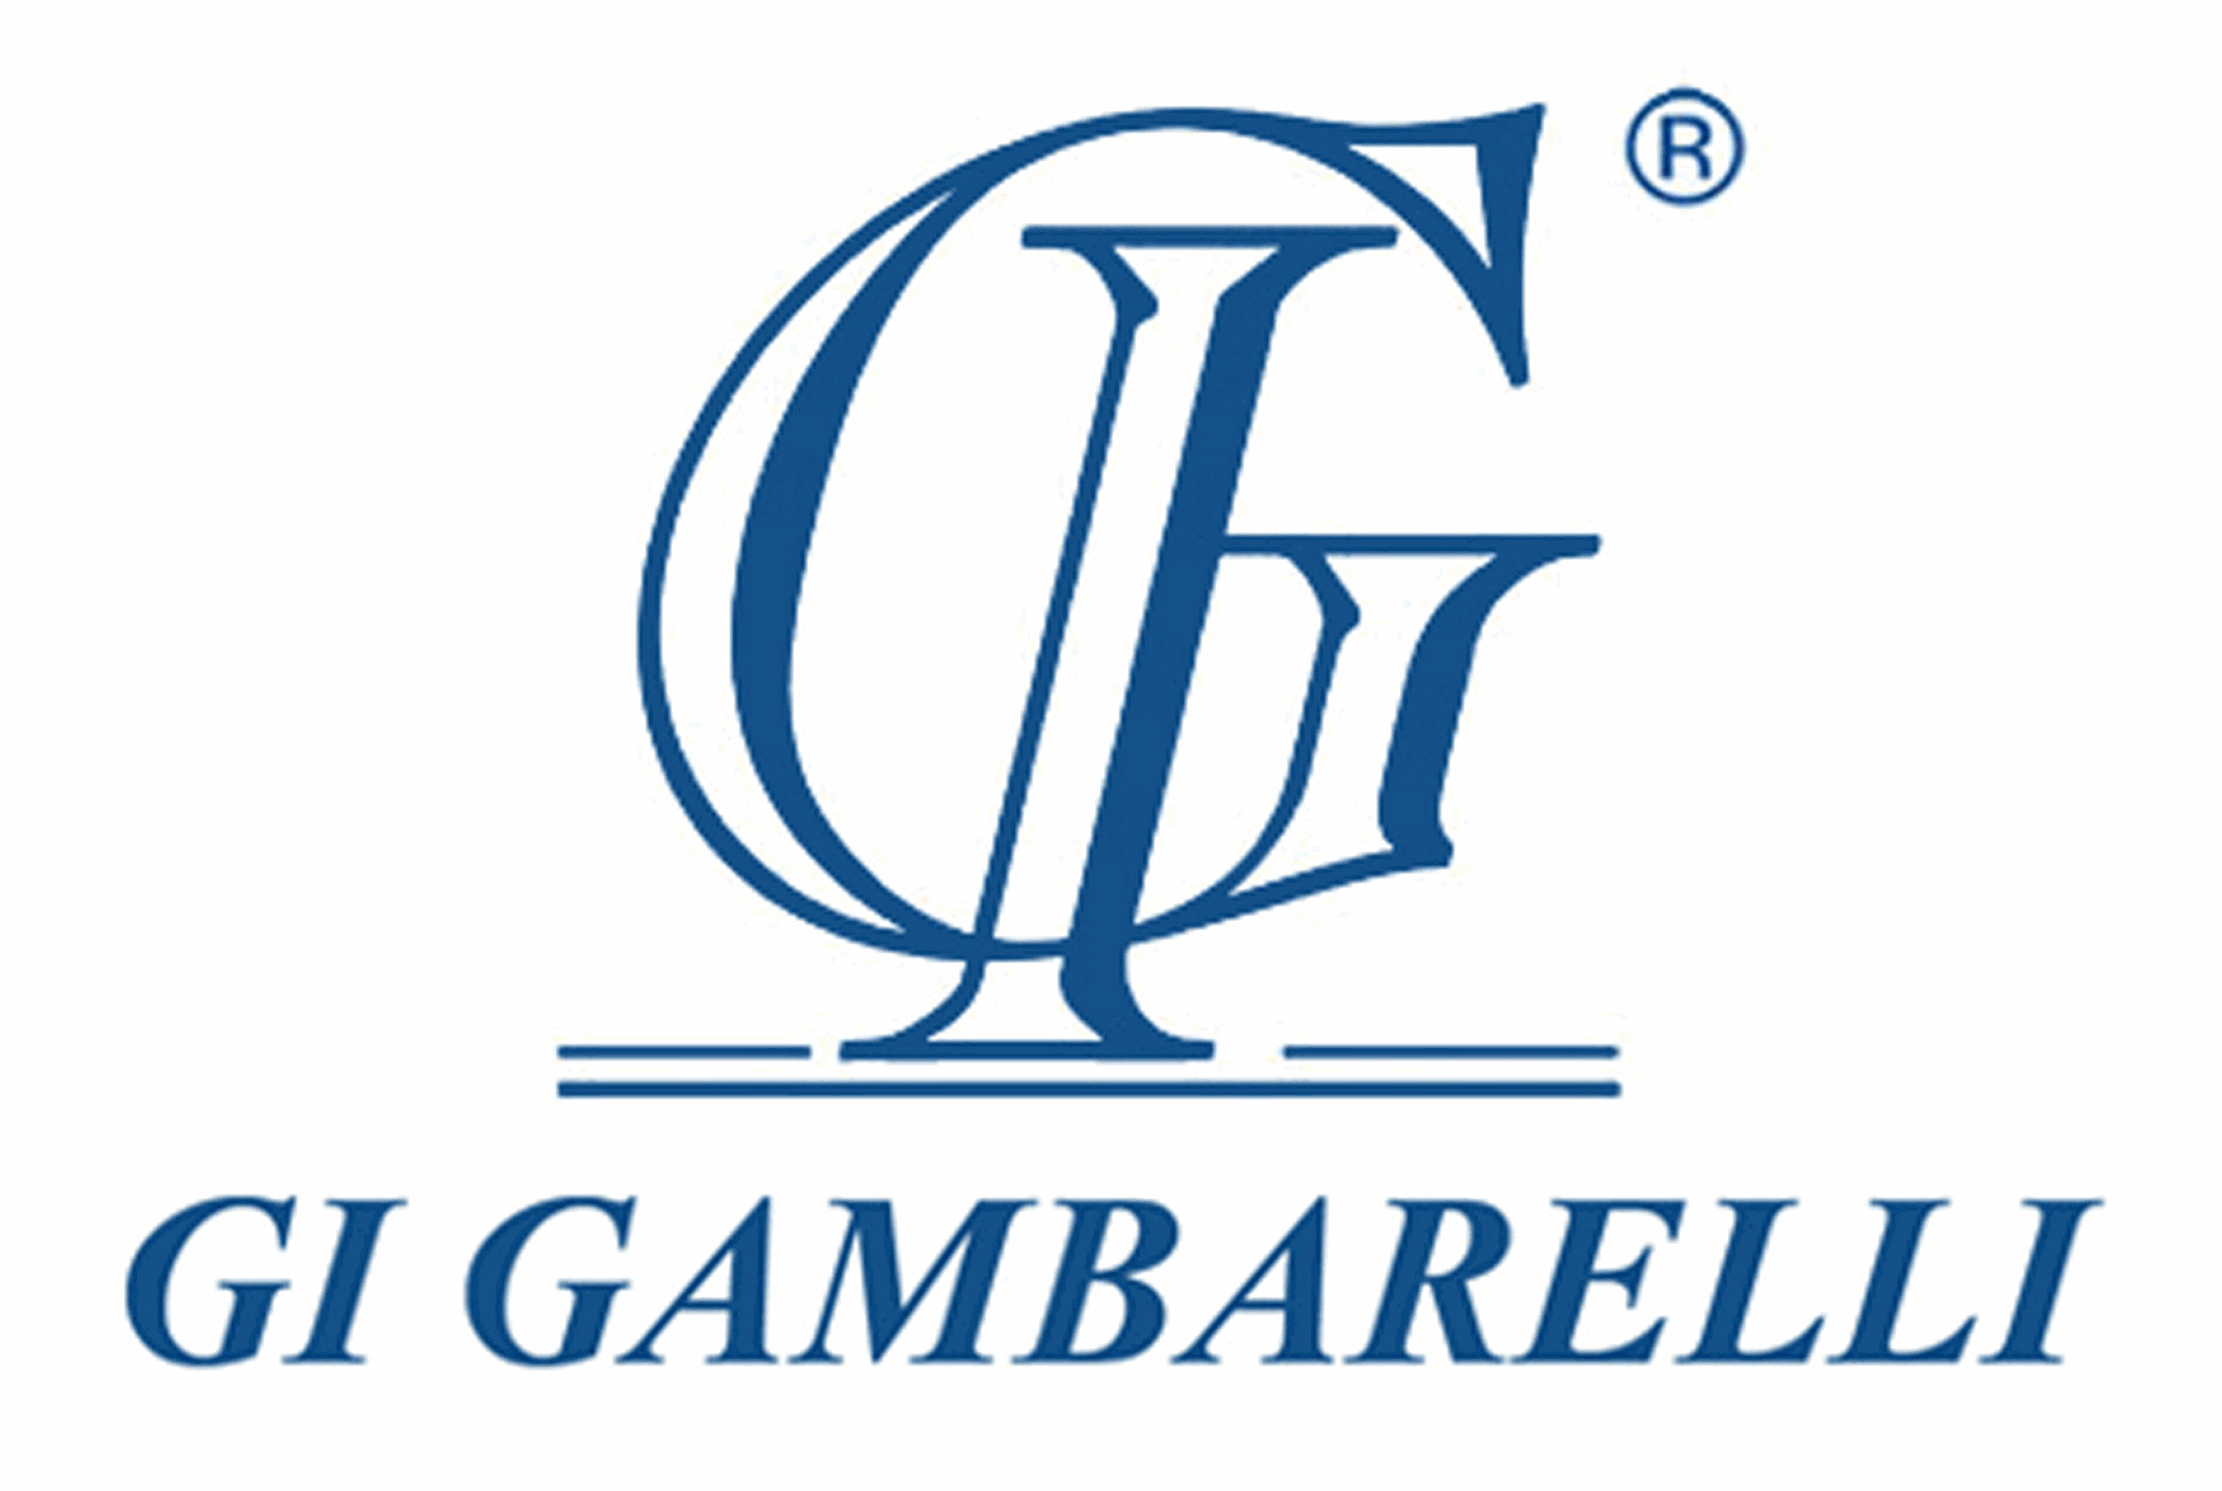 GI Logo - GI Gambarelli | Archiproducts